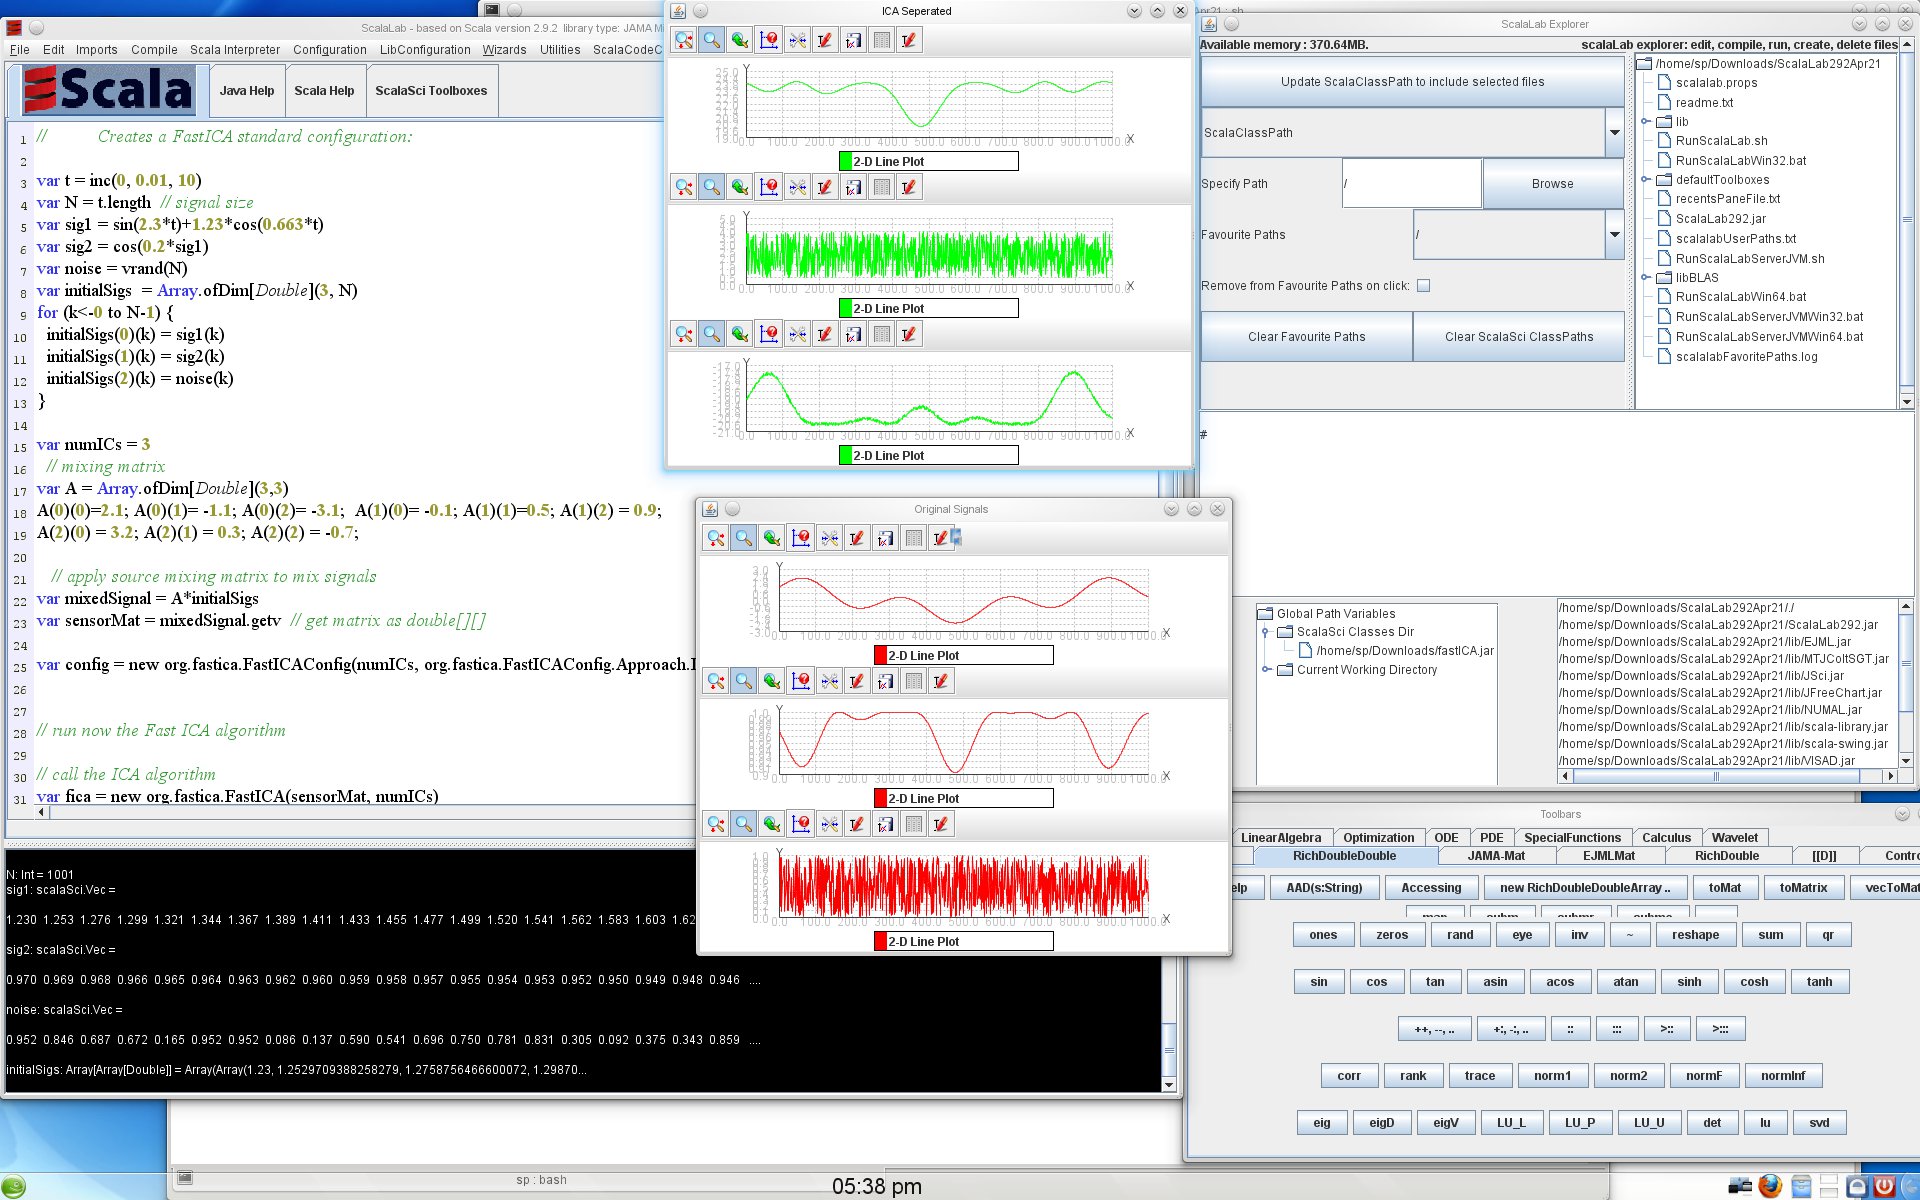 ScalaLab 211 (Dec 01) software screenshot